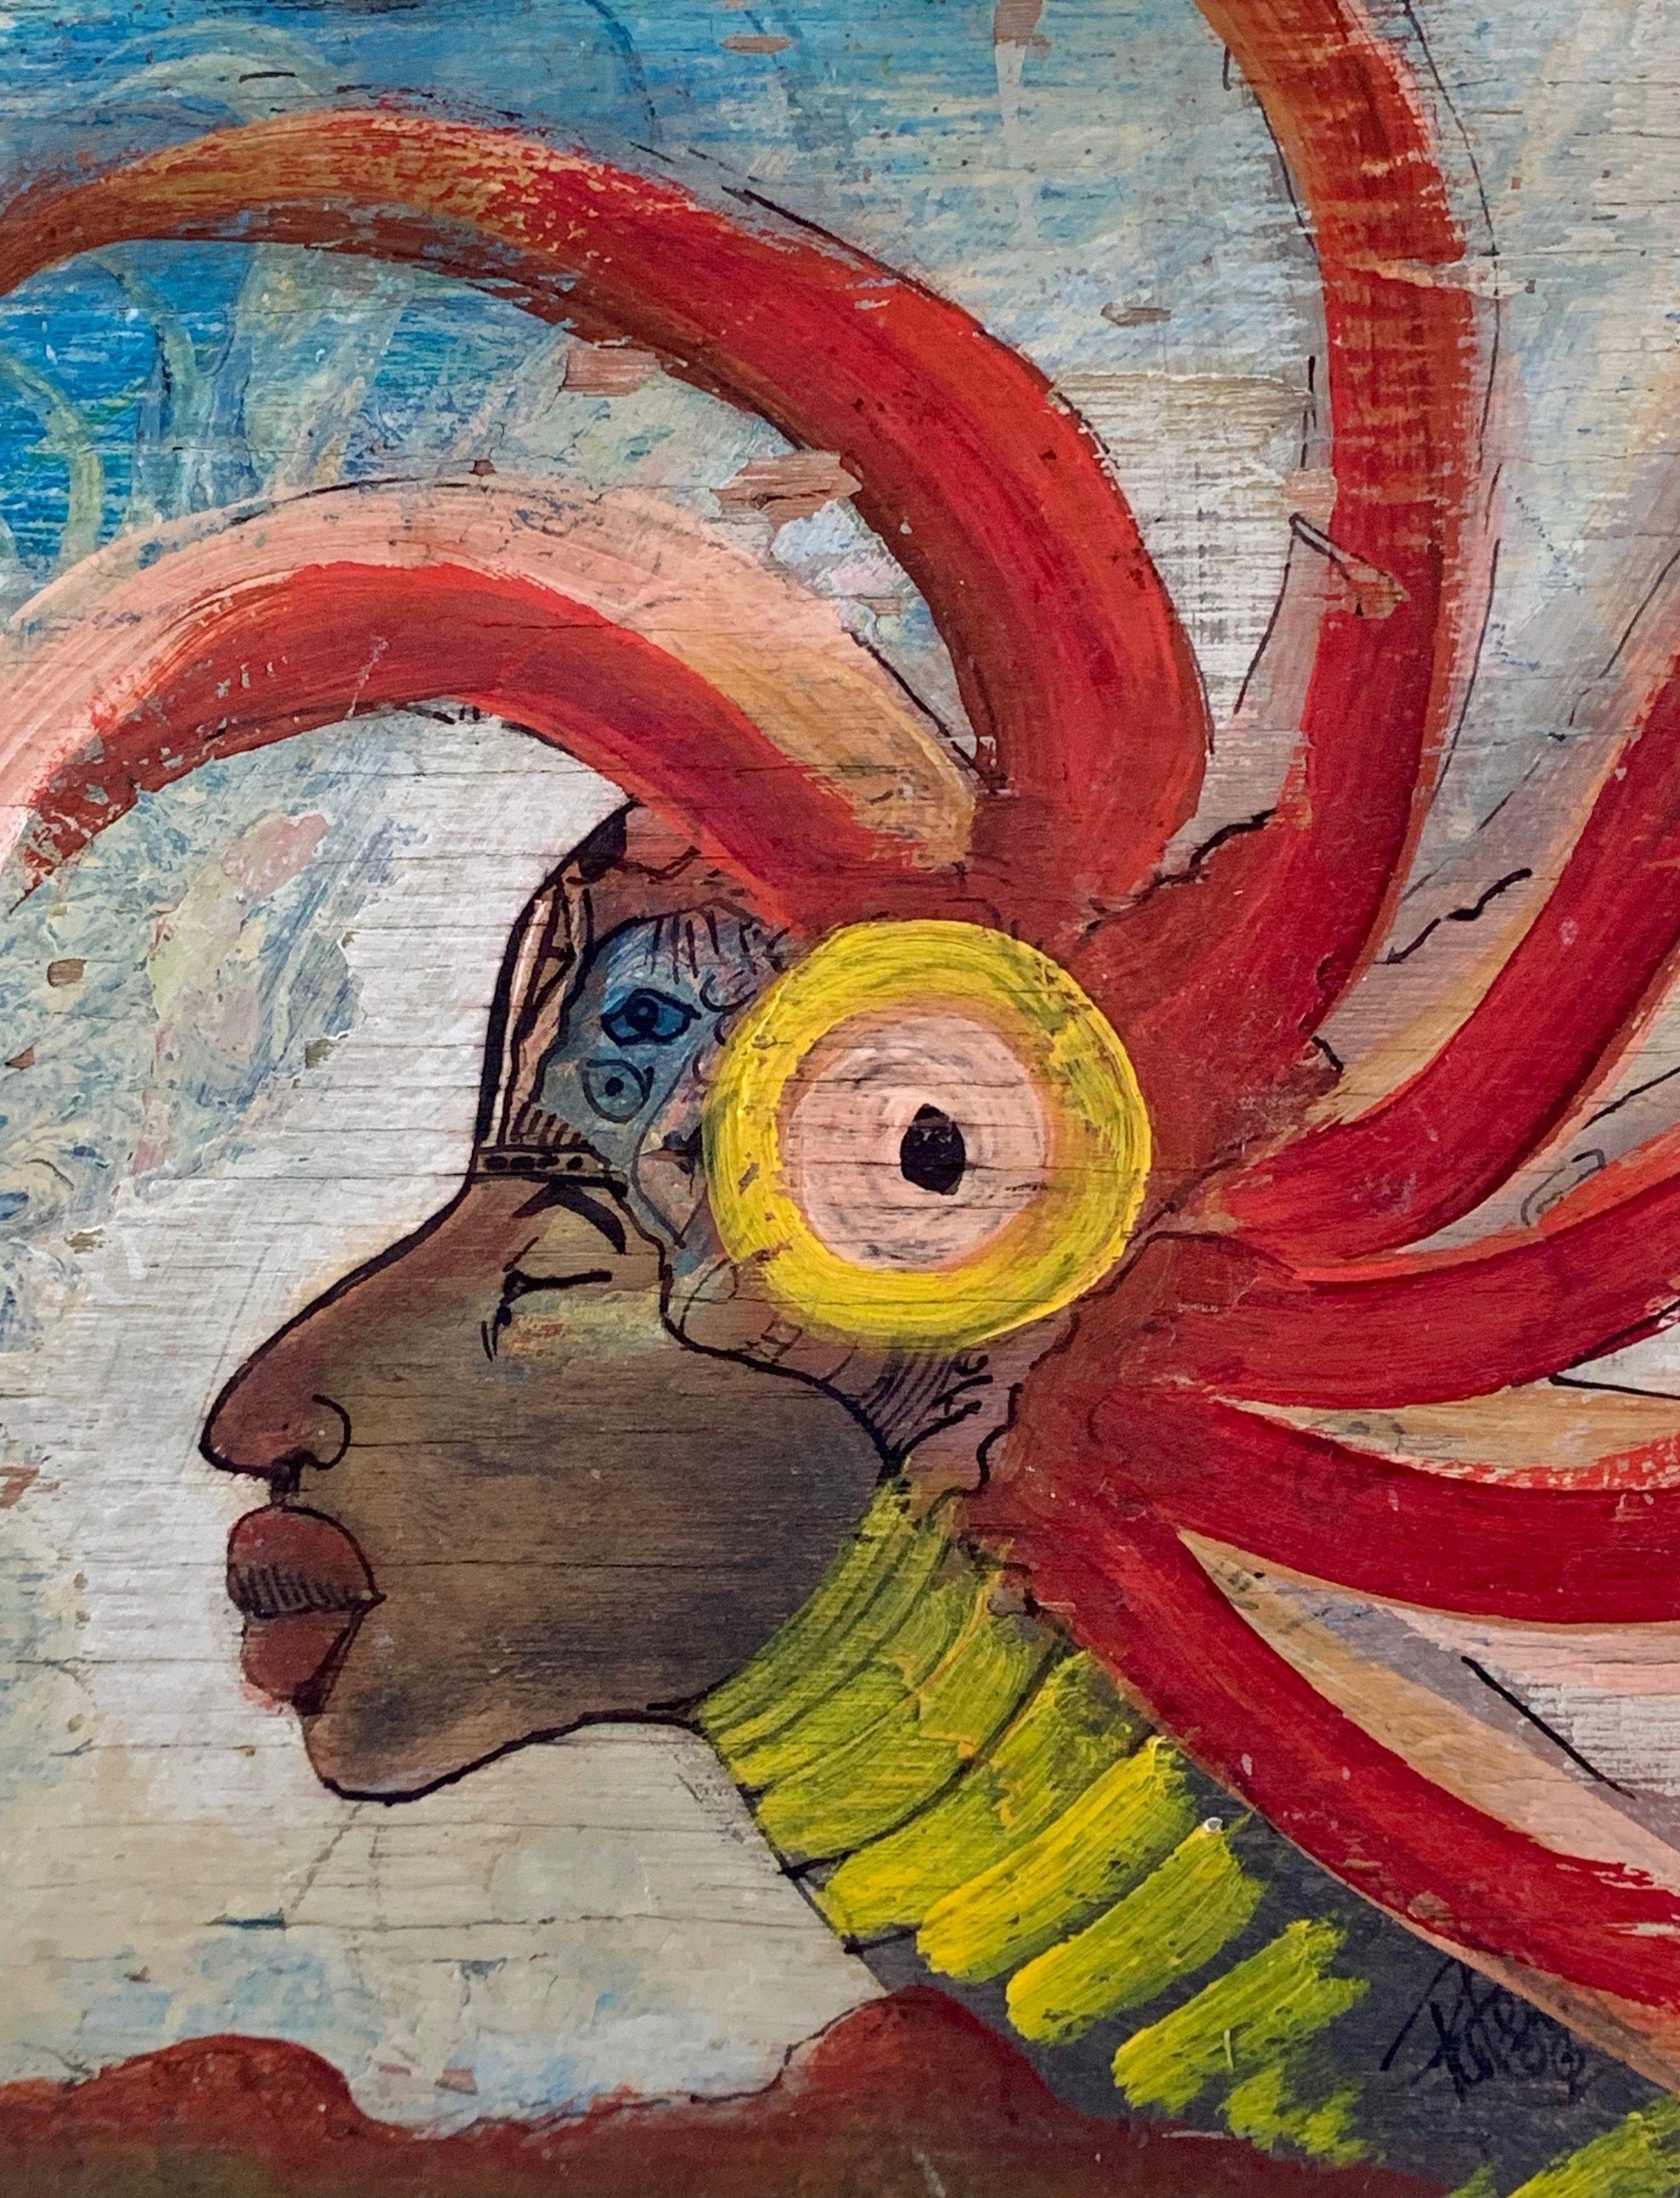 Artist Signed Folk Art Mixed Media Painting on Wood Colorful Portrait of Woman w/ Headdress